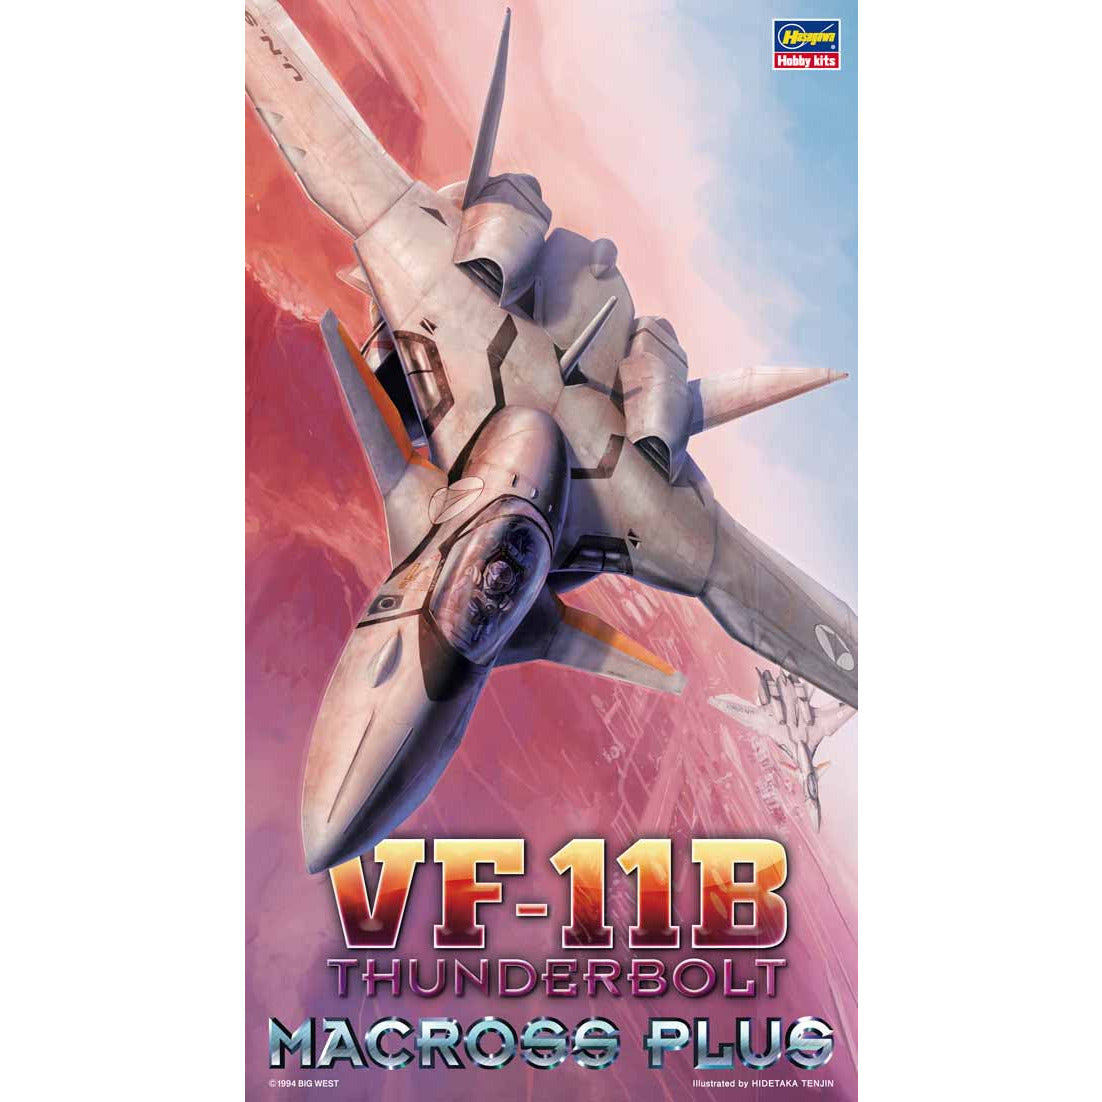 Macross Plus VF-11B Thunderbolt 1/72 #65722 by Hasegawa